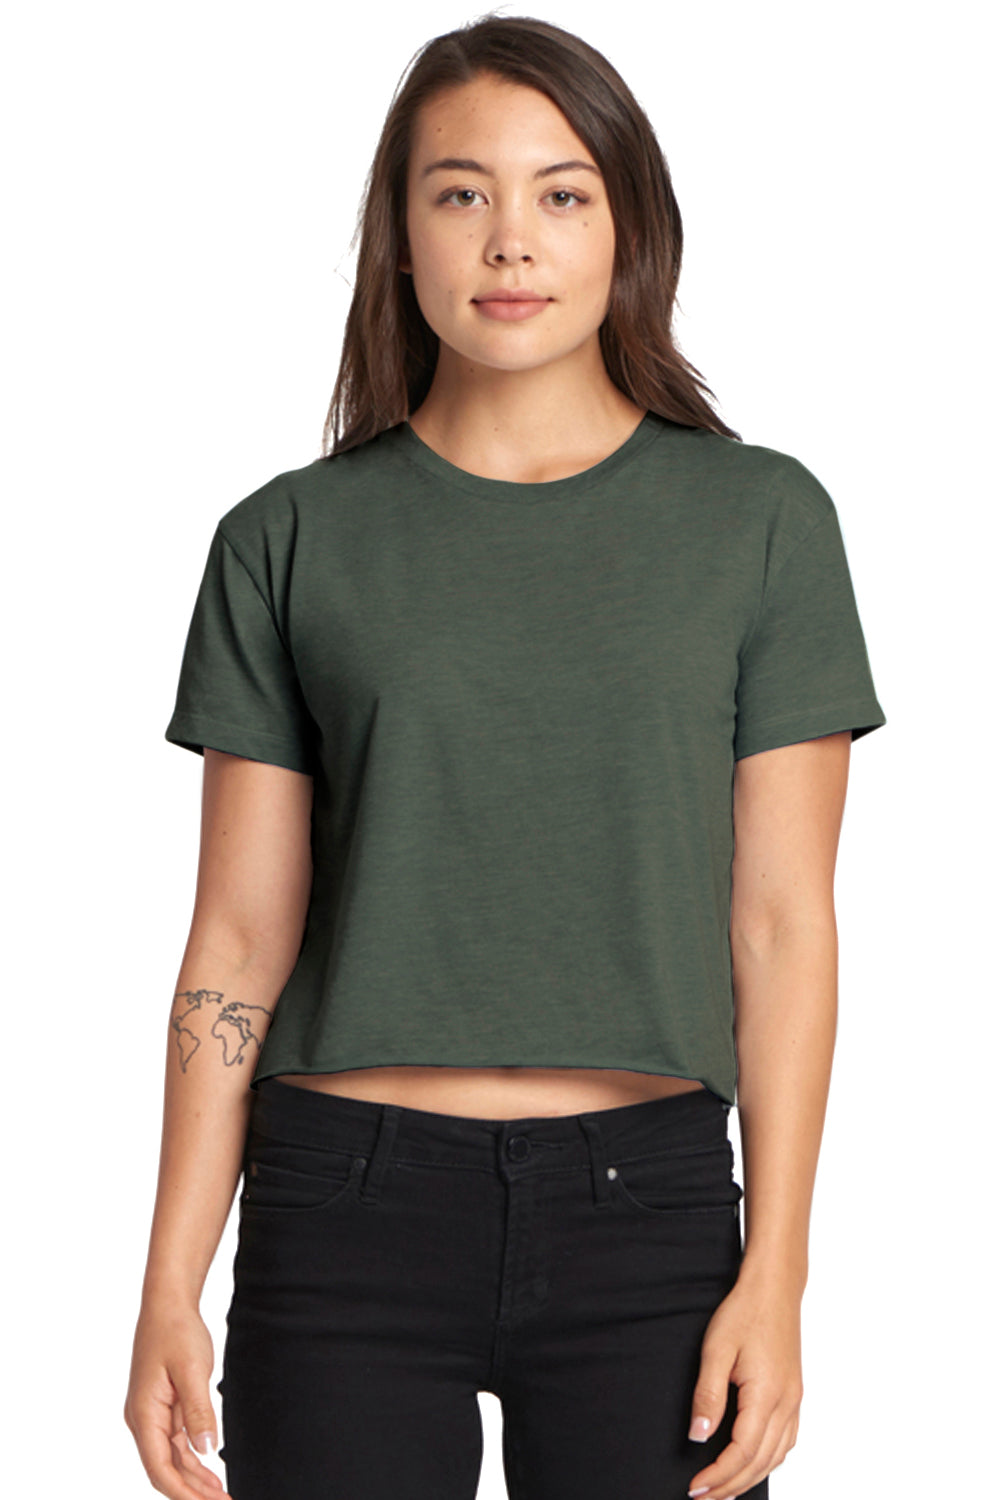 Next Level N5080 Womens Festival Cali Crop Short Sleeve Crewneck T-Shirt Pine Green Front